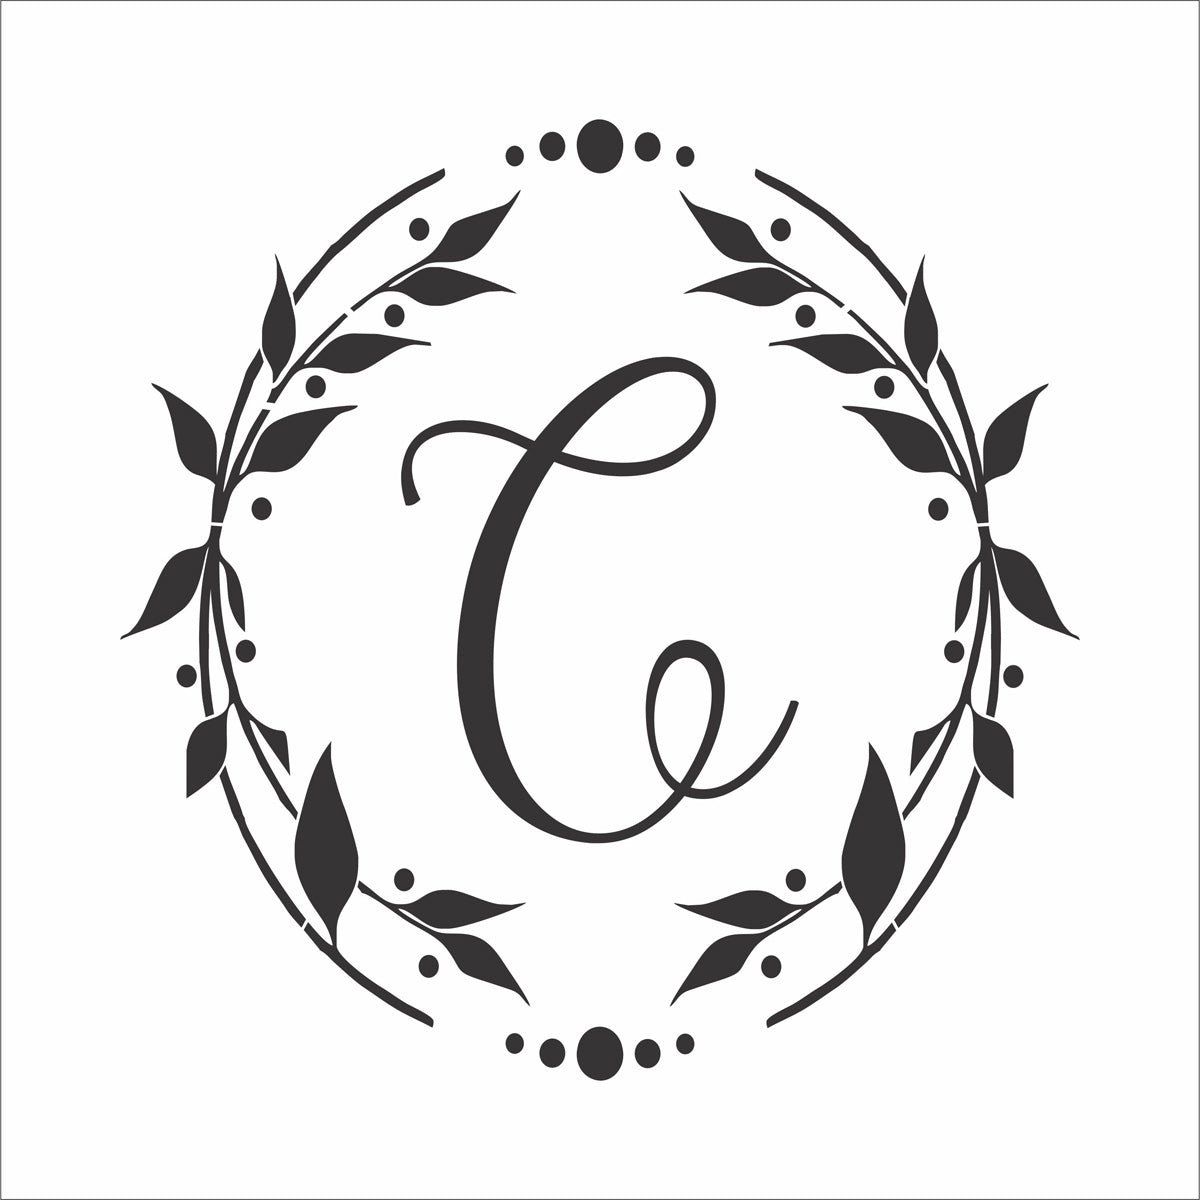 Custom Letter Monogram Wreath Stencil - Superior Stencils